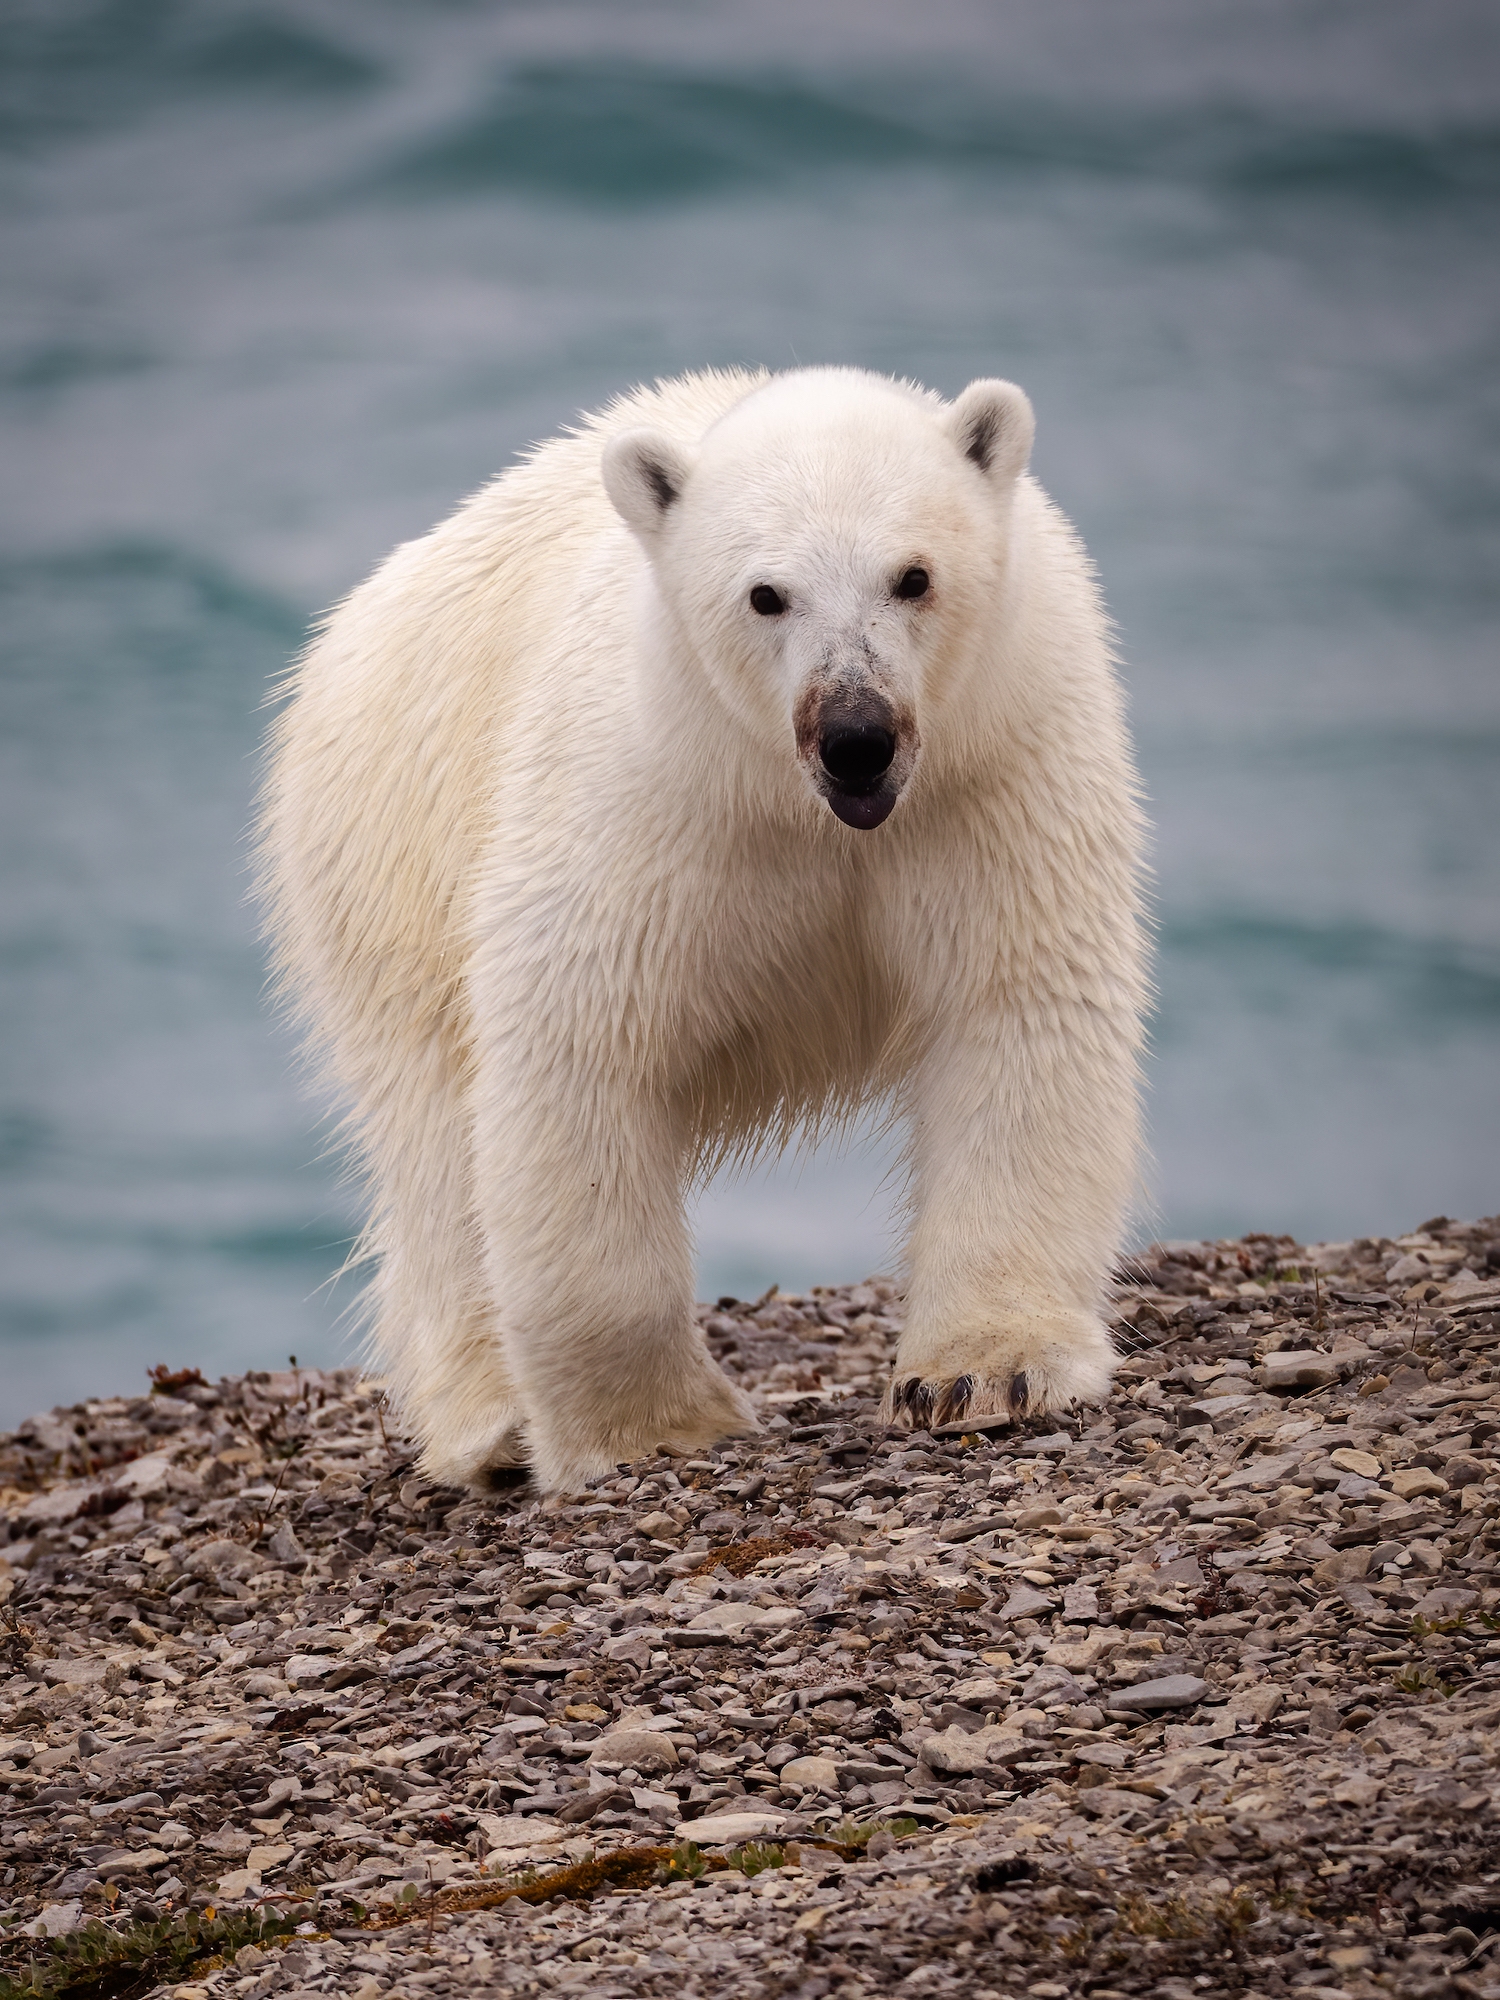 A polar bear cub